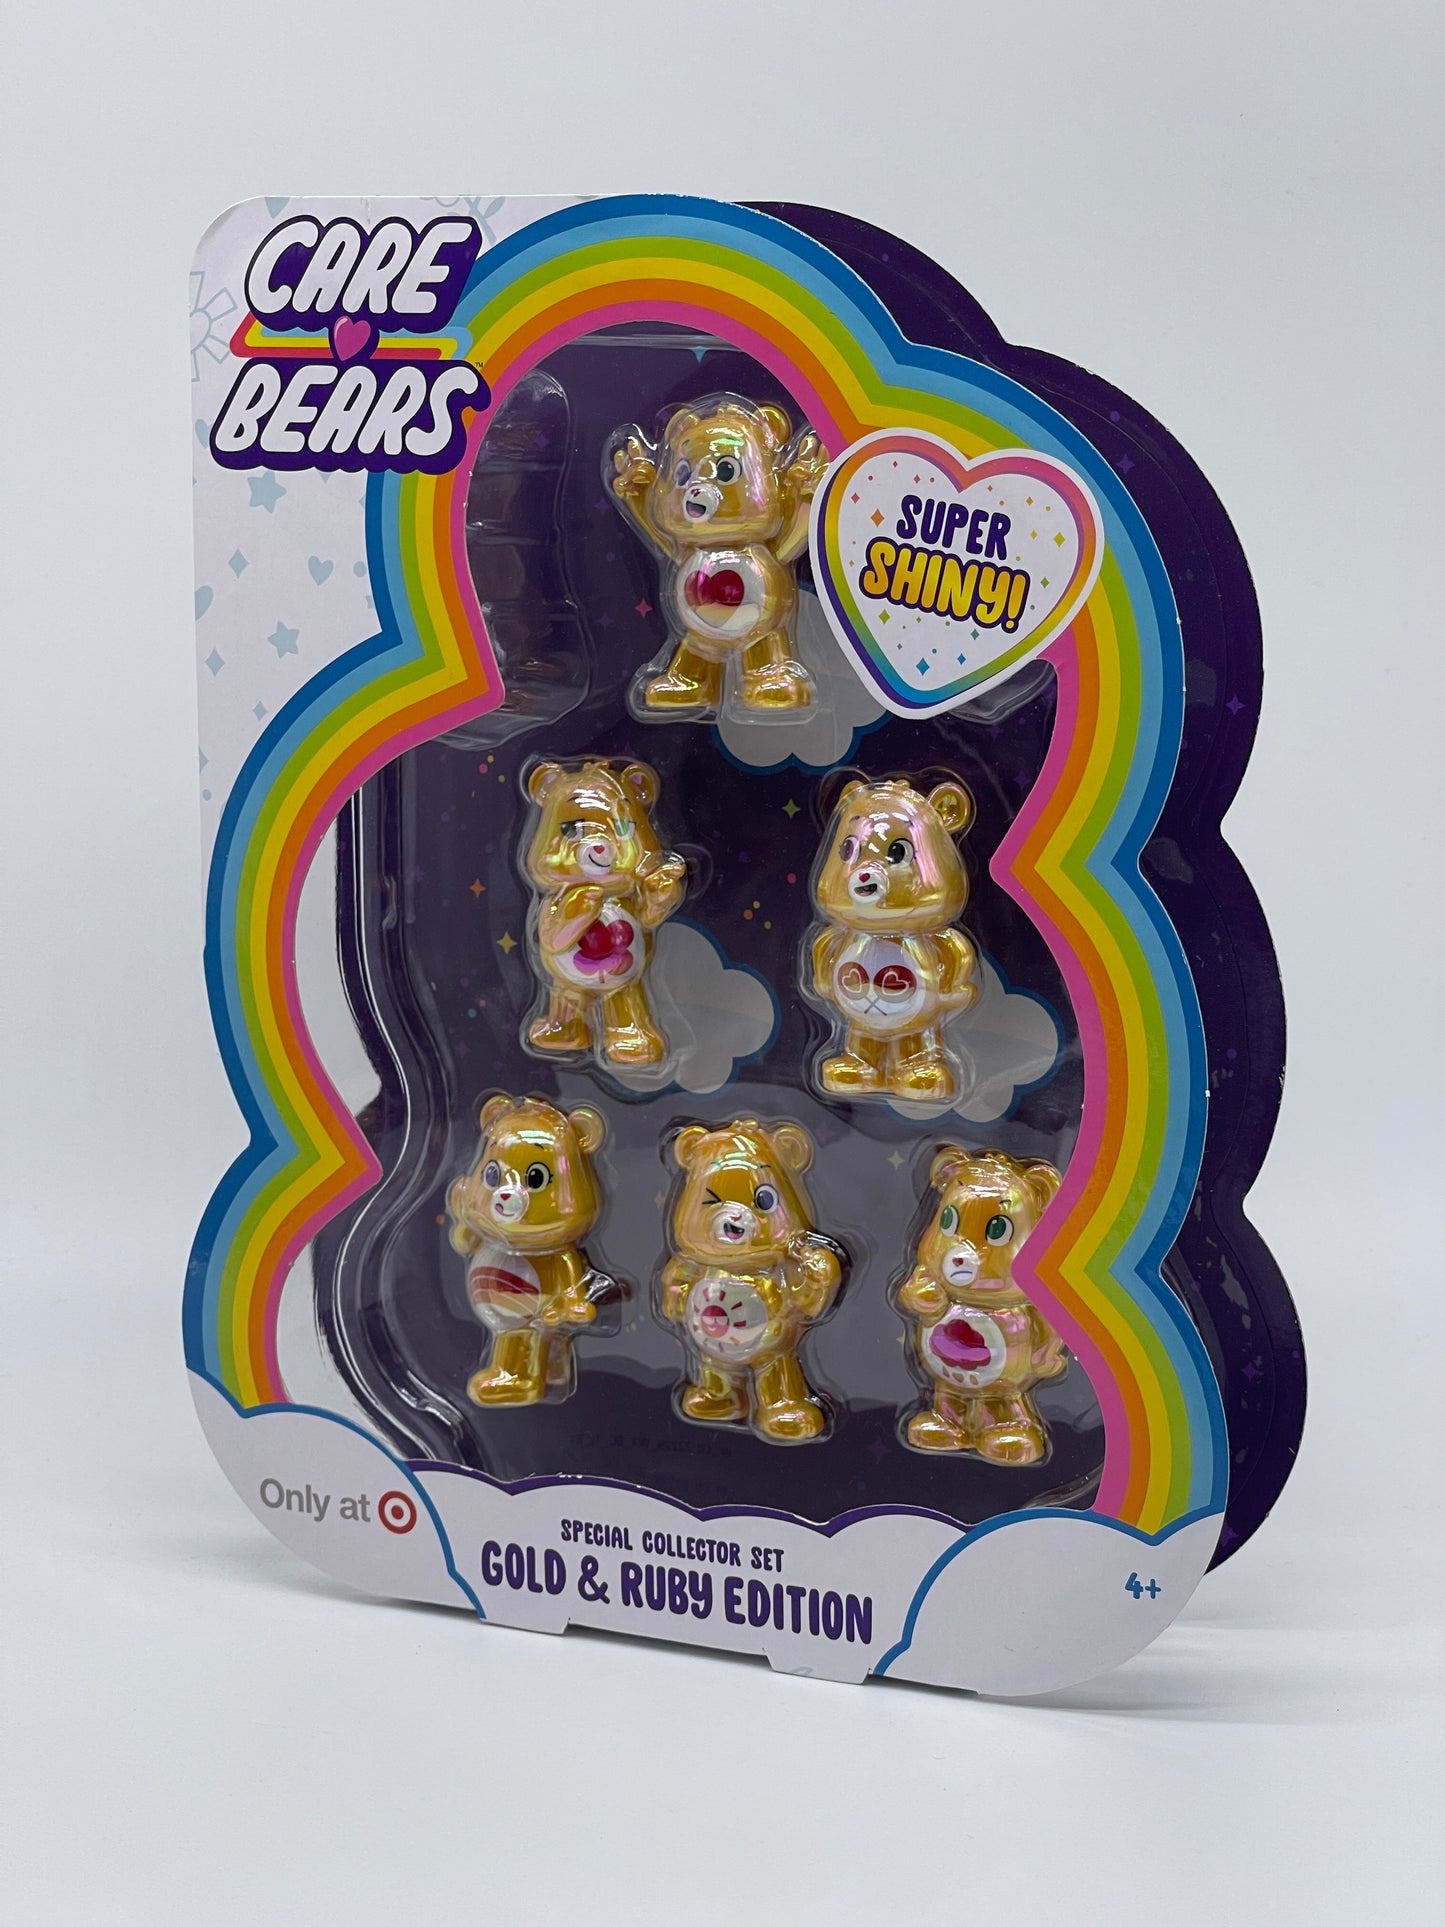 Care Bears Glücksbärchi "Gold & Ruby Edition" Special Collector Set Super Shiny